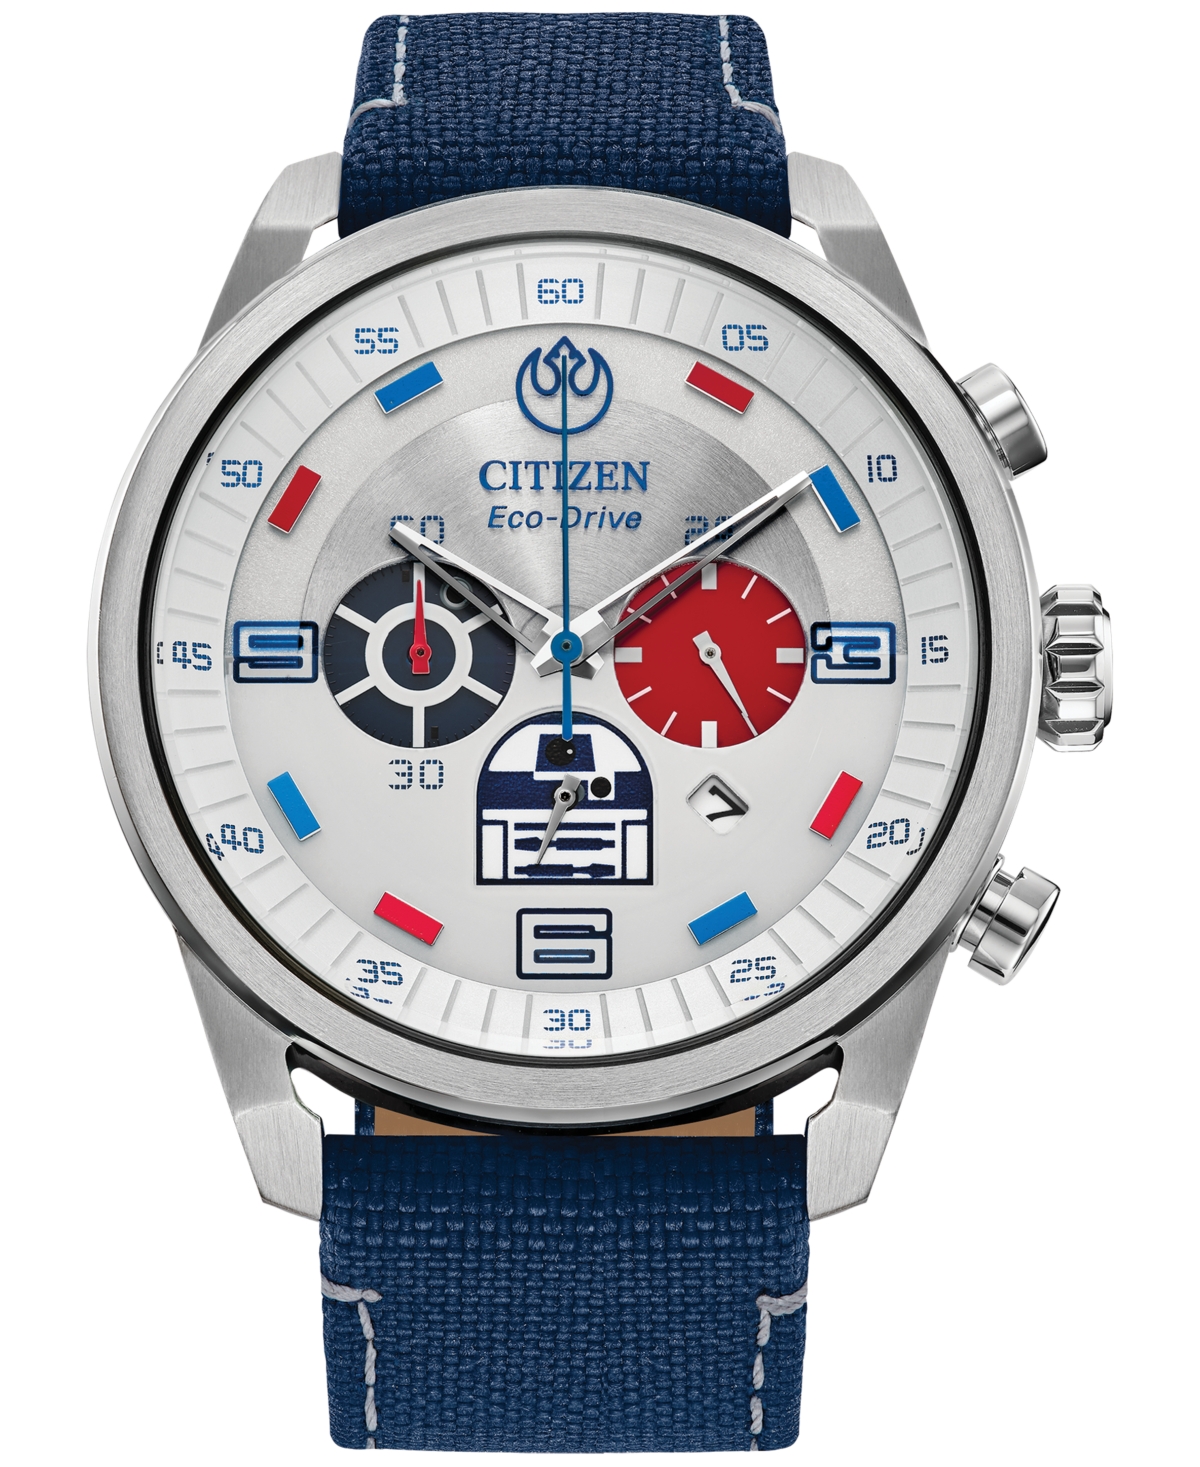 Citizen Eco-drive Men's Chronograph Star Wars R2-d2 Blue Nylon Strap Watch 45mm